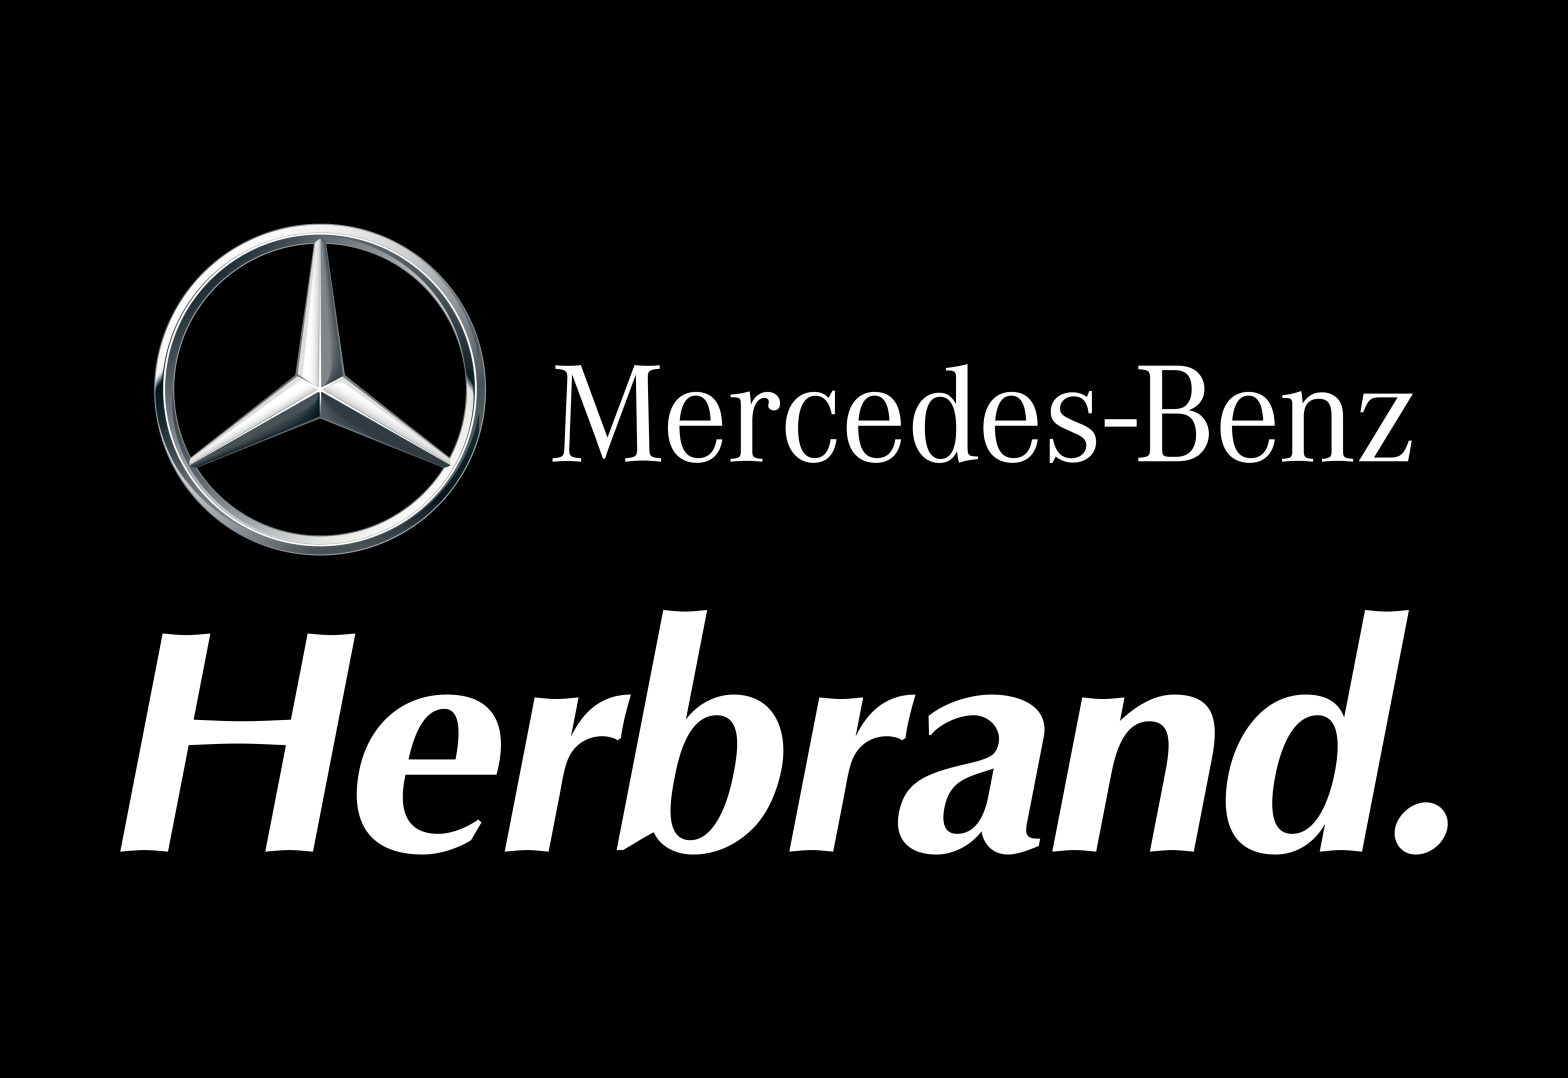 Mercedes-Benz Herbrand Logo